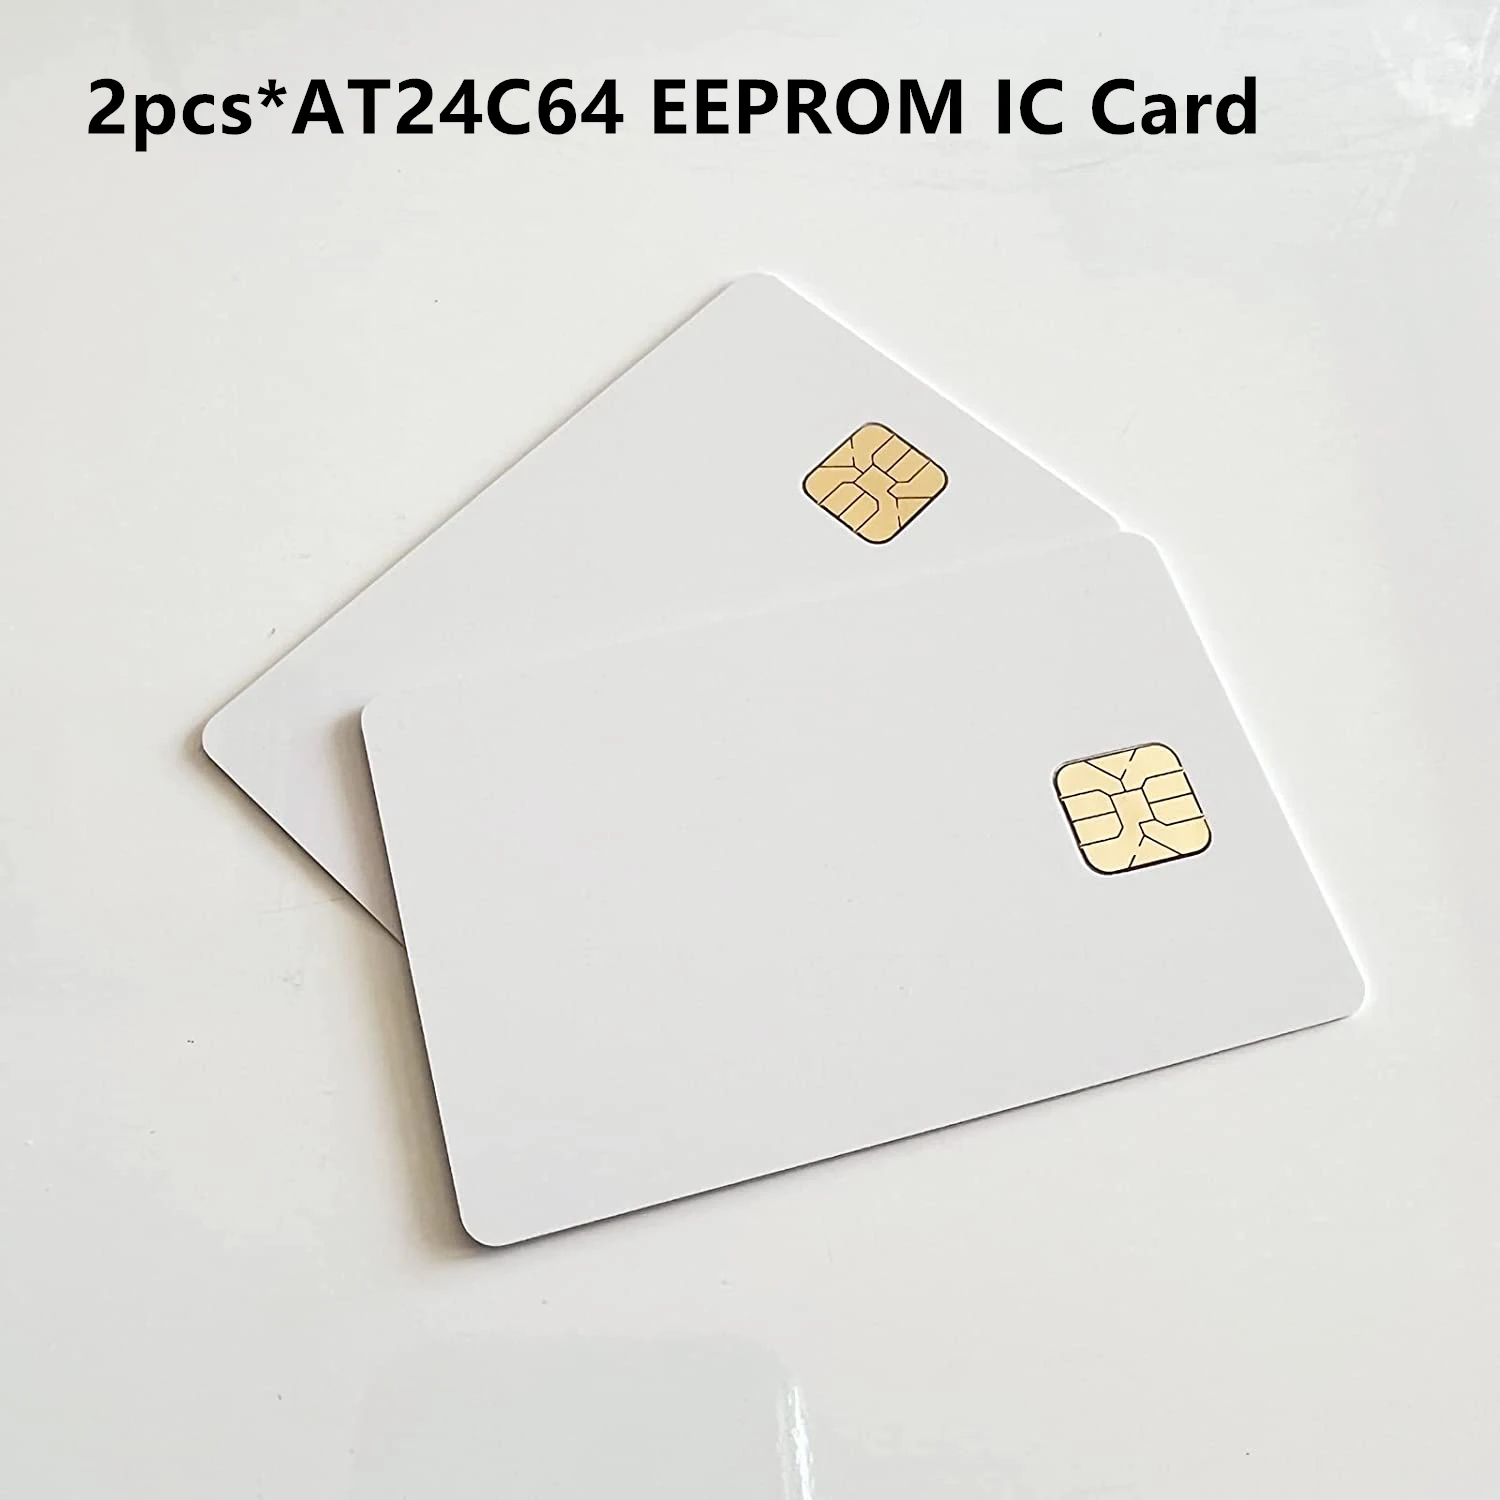 Tanio 2 sztuk AT24C64 ISO7816 Smartcard